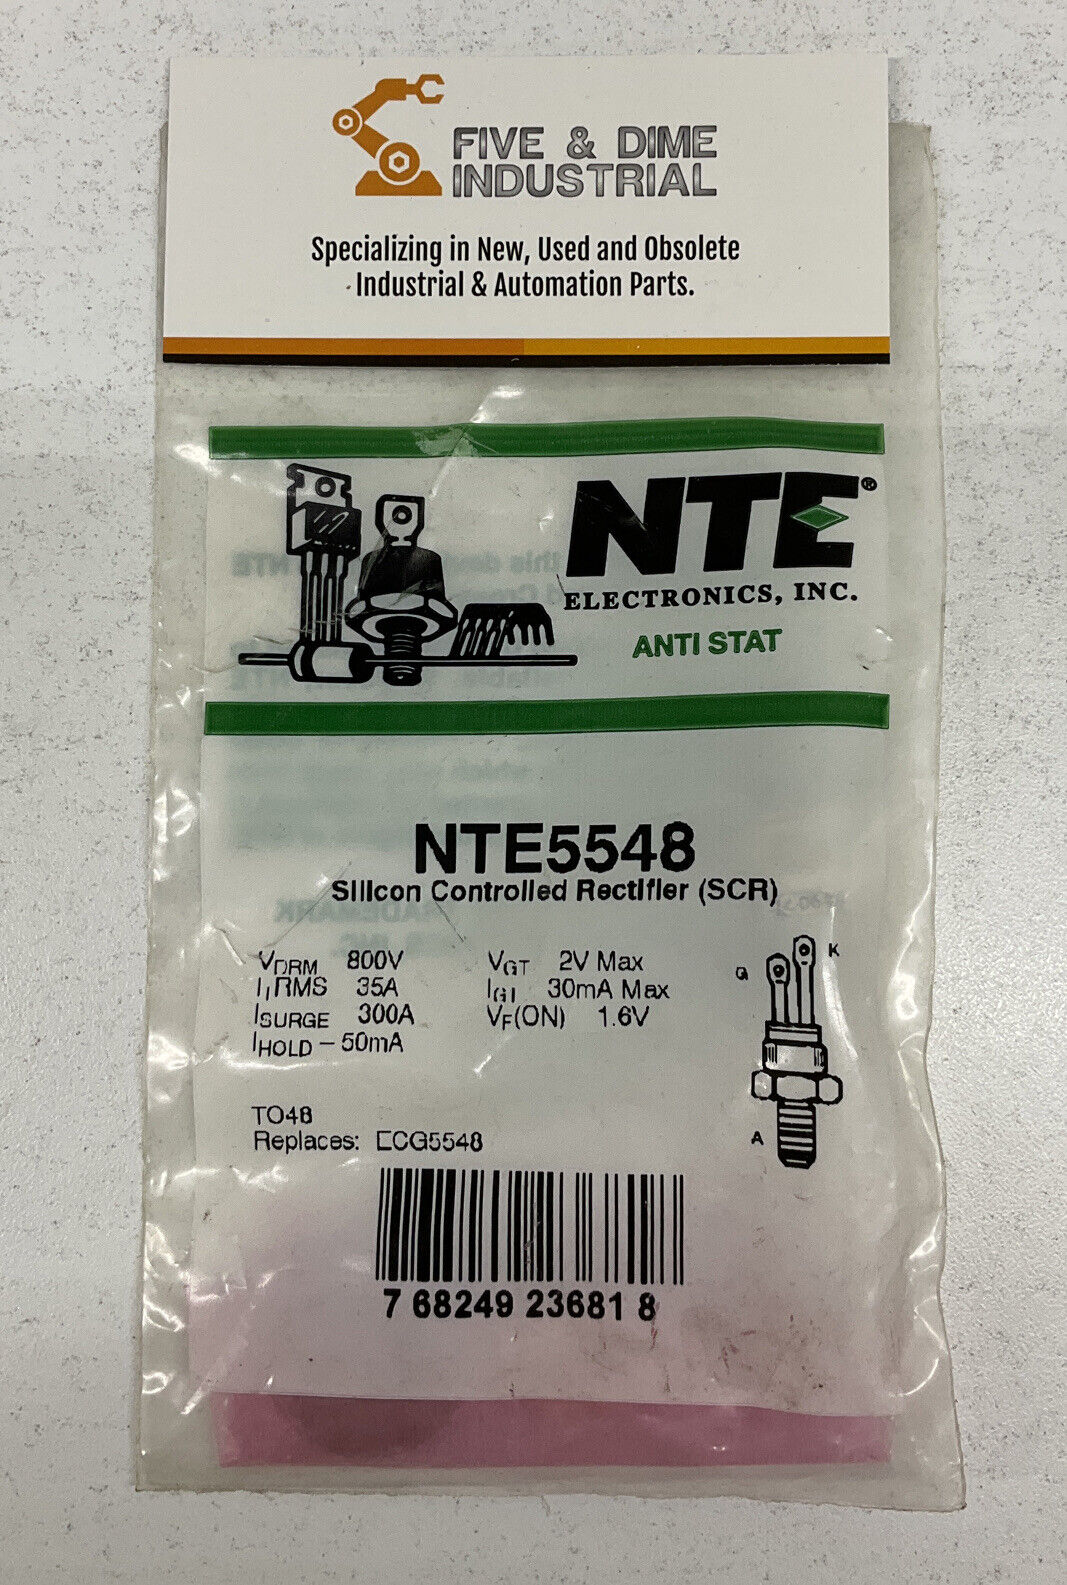 NTE NTE5548 Silicon Controlled Rectifier (SCR)  (GR158)